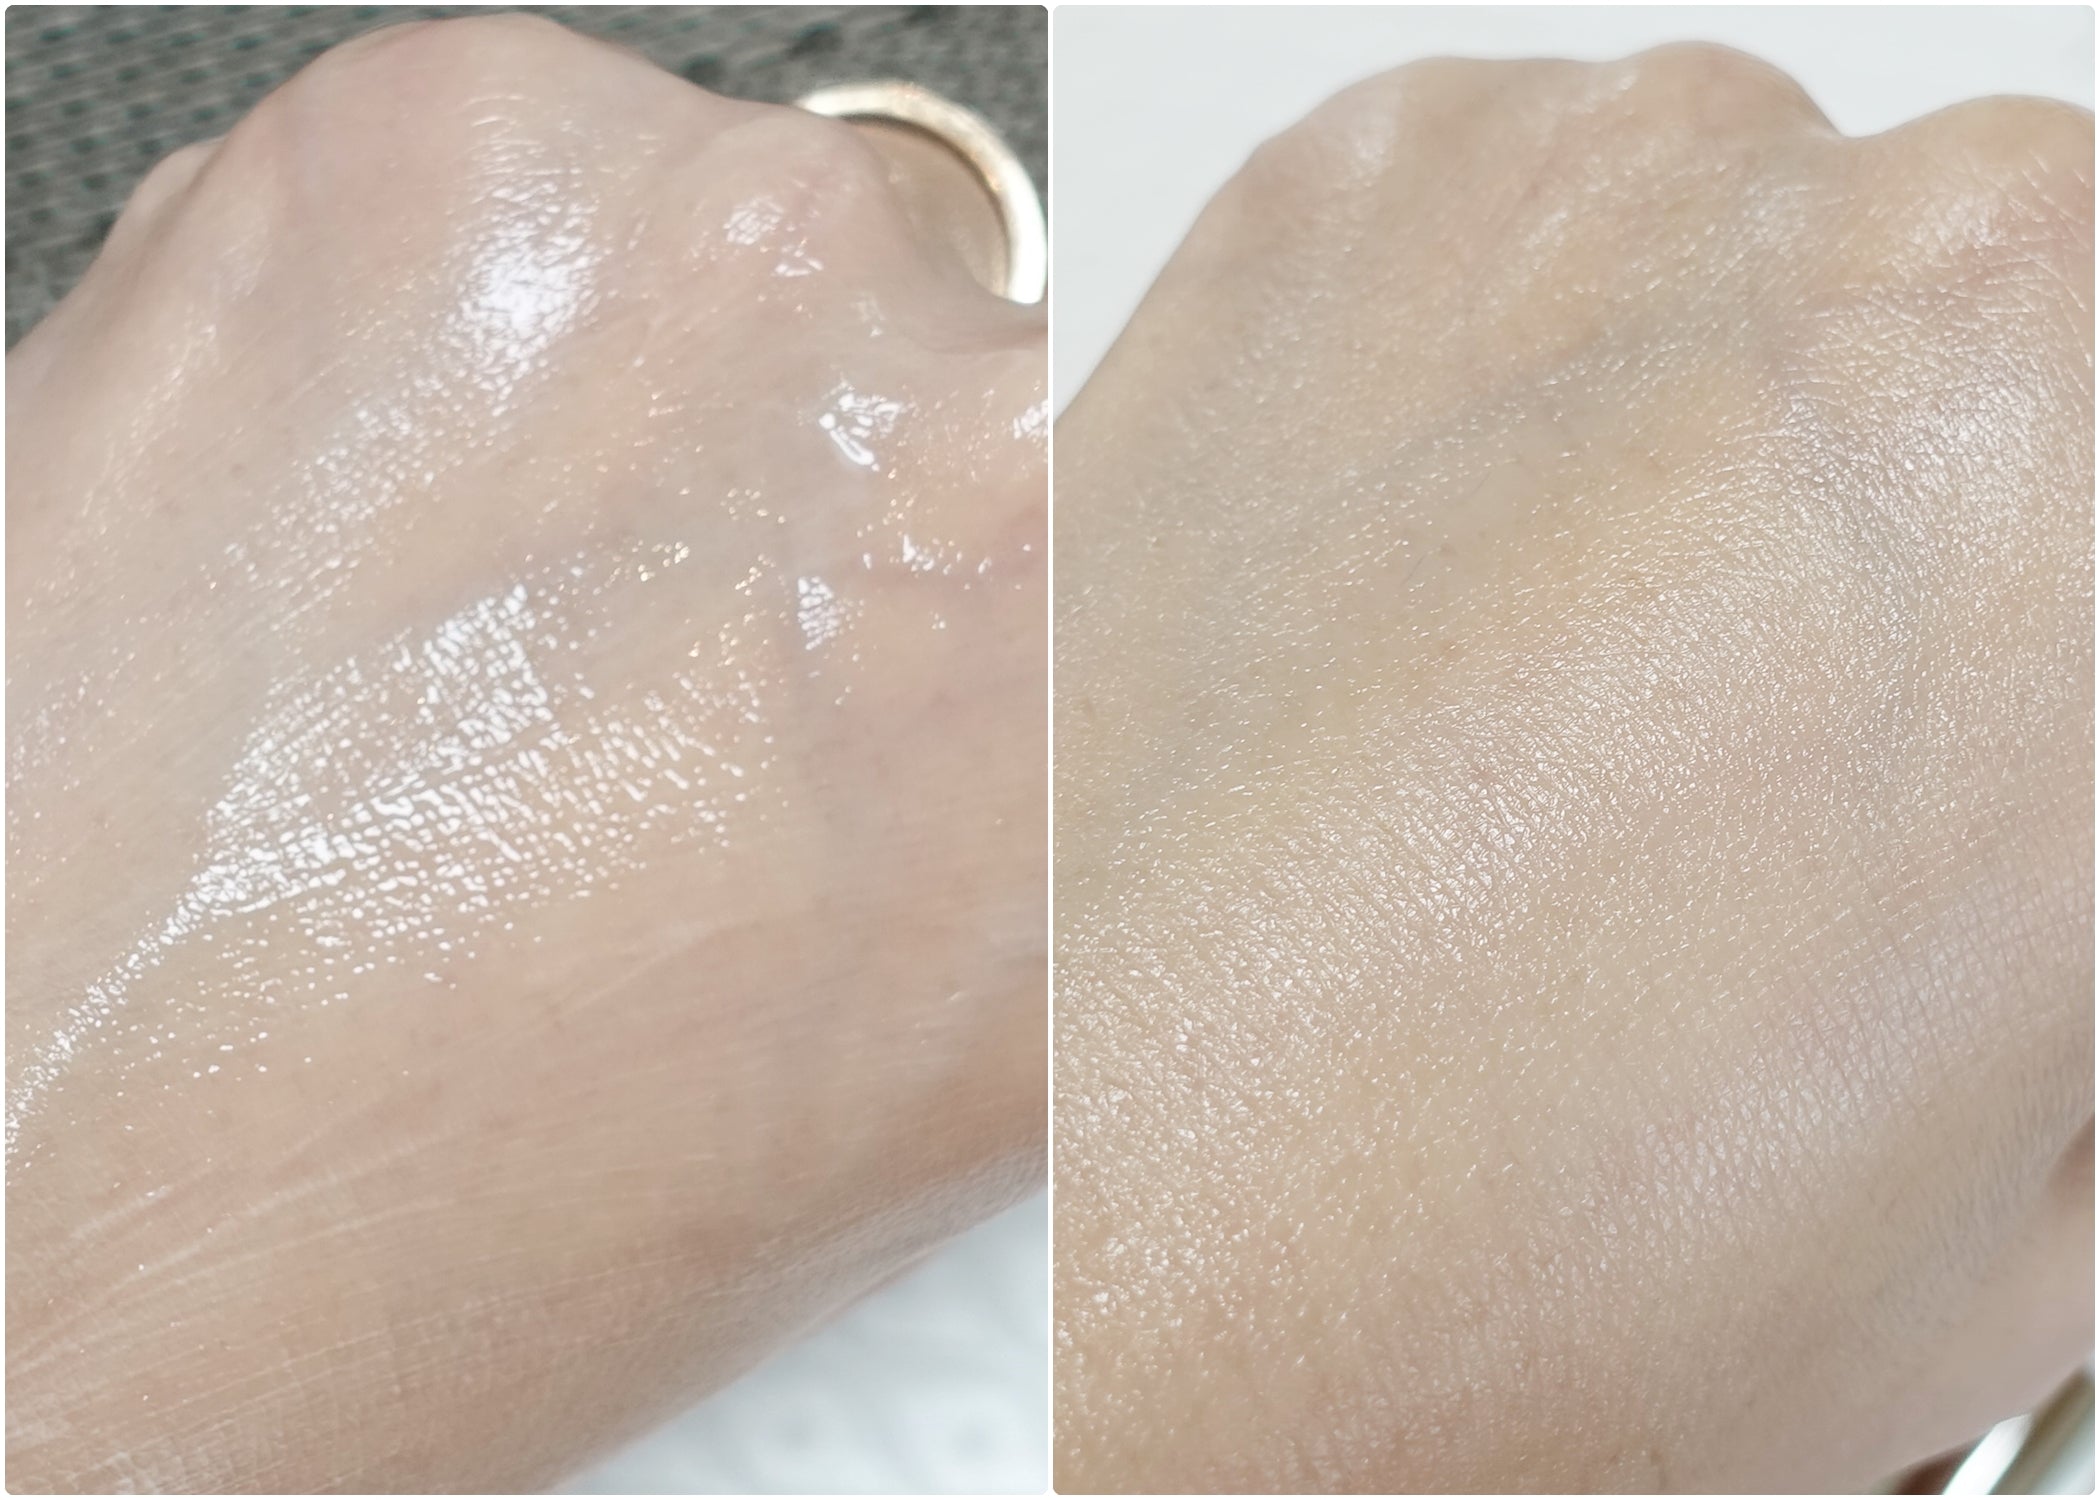 CLAM Dermaqua Marine Daily Soft Emulsion 120ml (Whitening, Anti-wrinkle Effect)